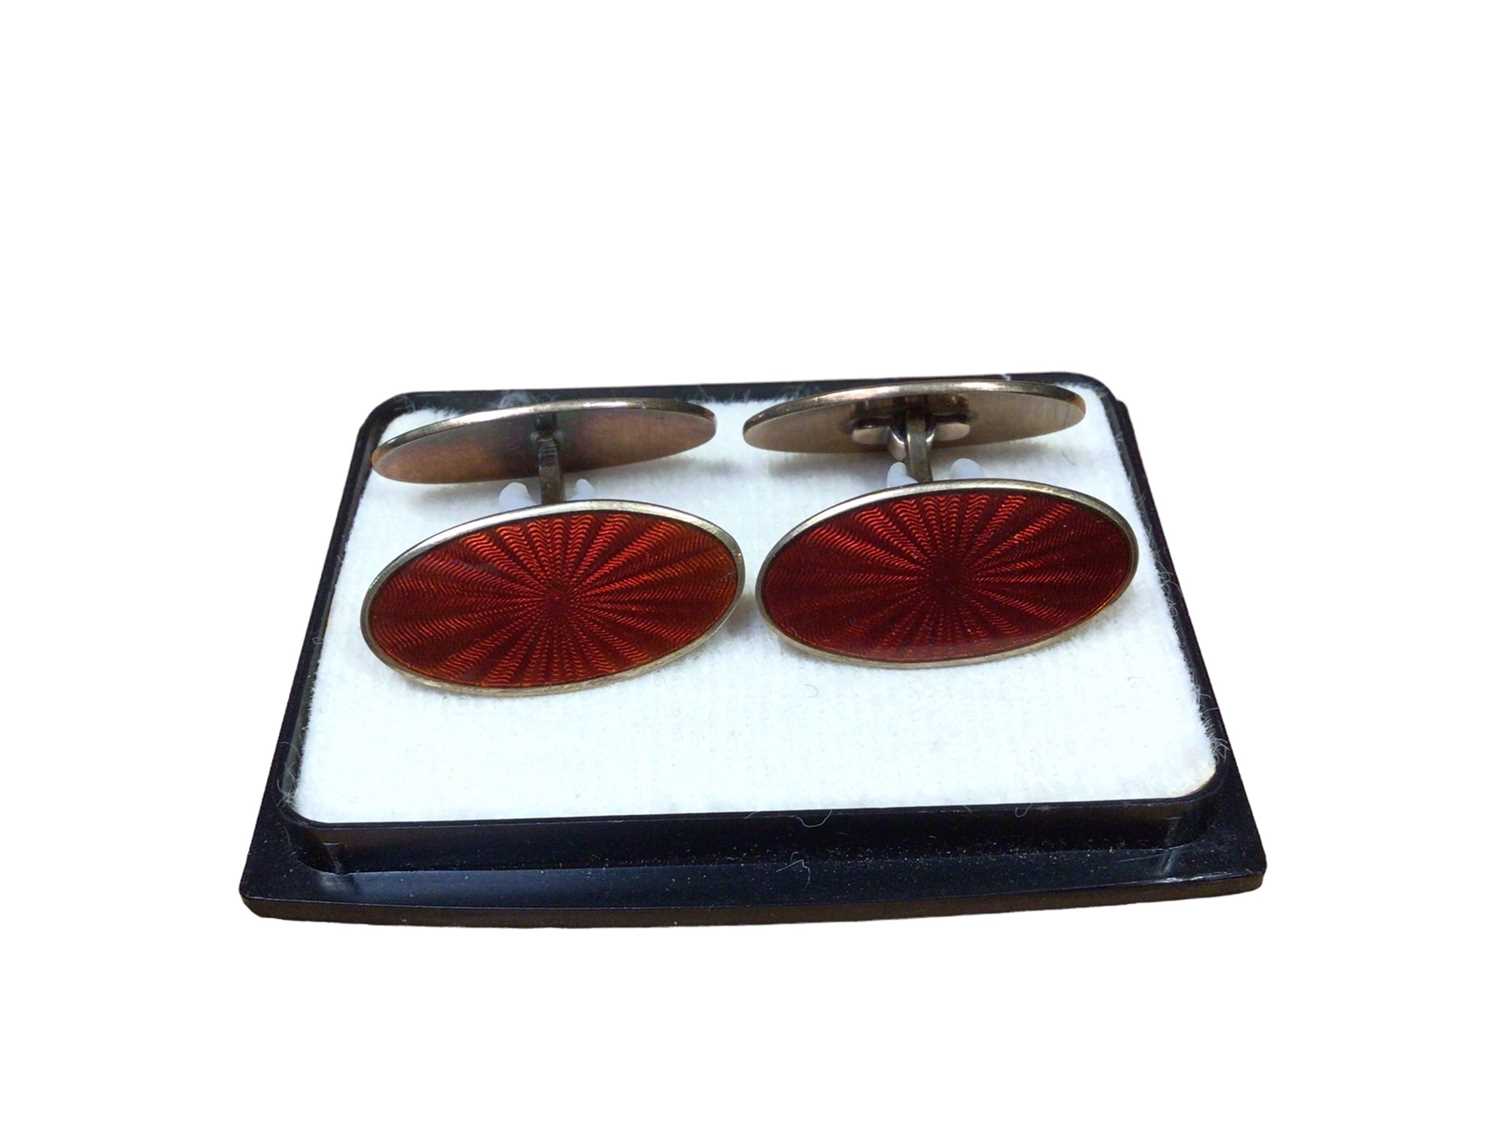 Pair of David Andersen Norwegian silver gilt and red guilloché enamel cufflinks in original box